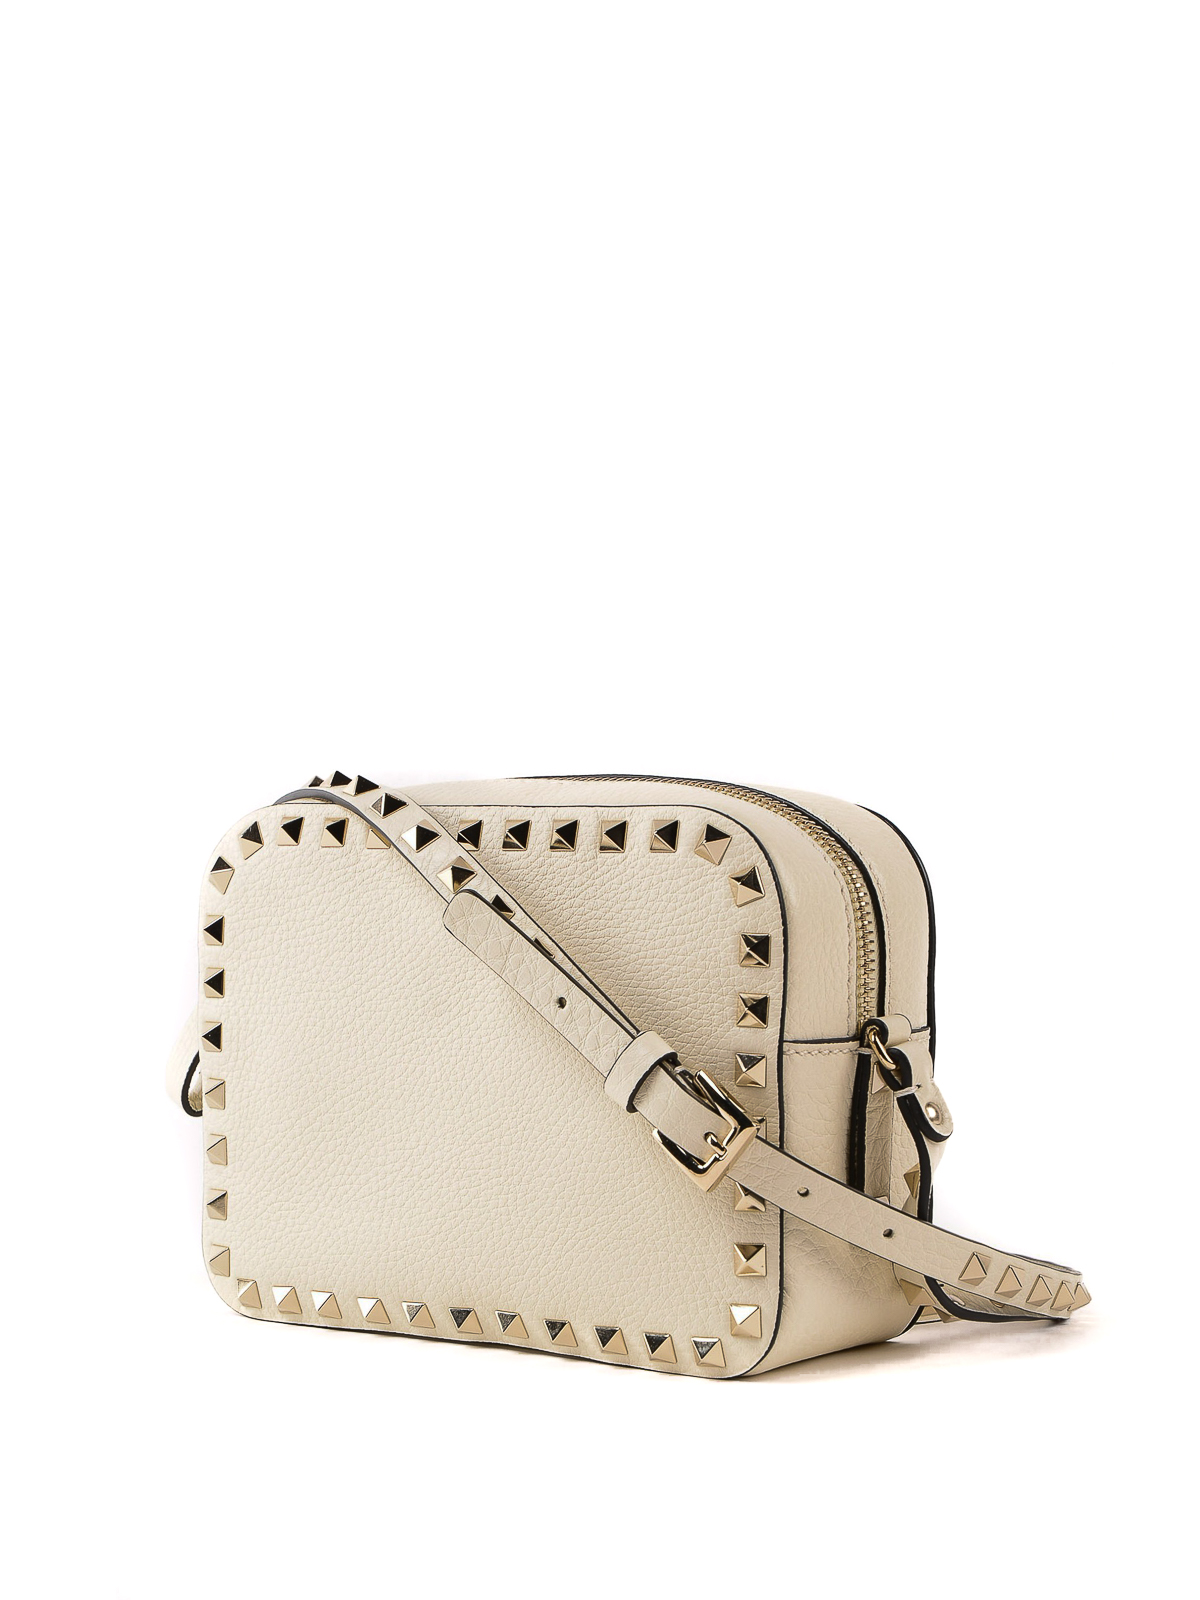 VALENTINO GARAVANI: Rockstud bag in leather with studs - Ivory